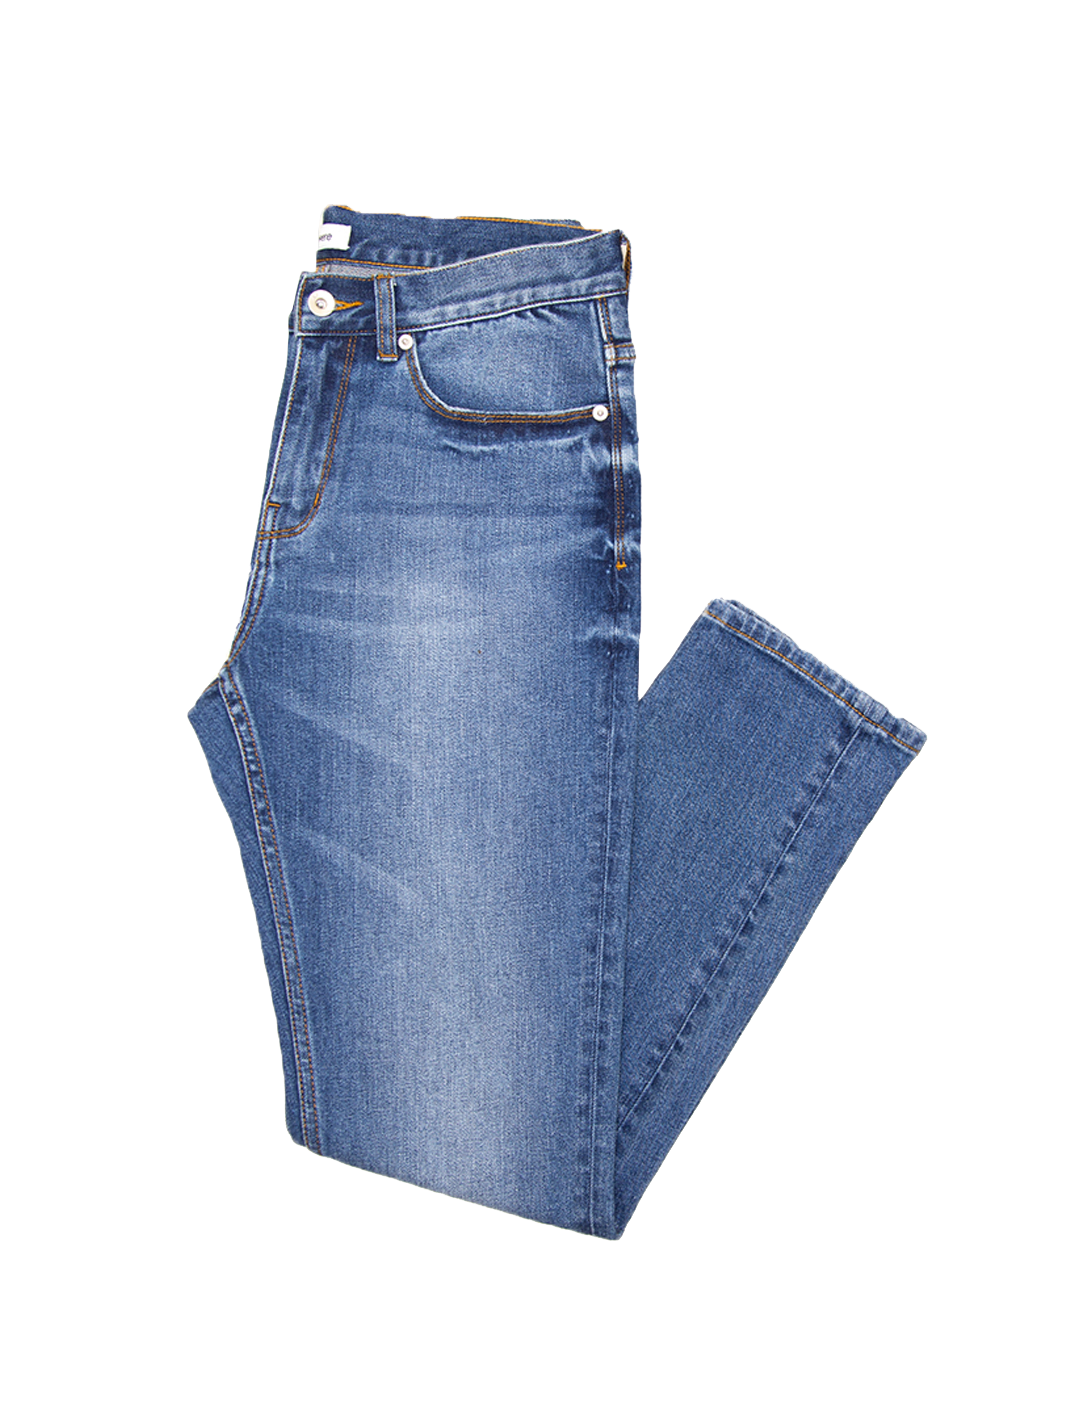 Asuwere Washed Blue Denim Jeans.png__PID:da3716b0-22a7-4328-912a-6b9d99013f4c